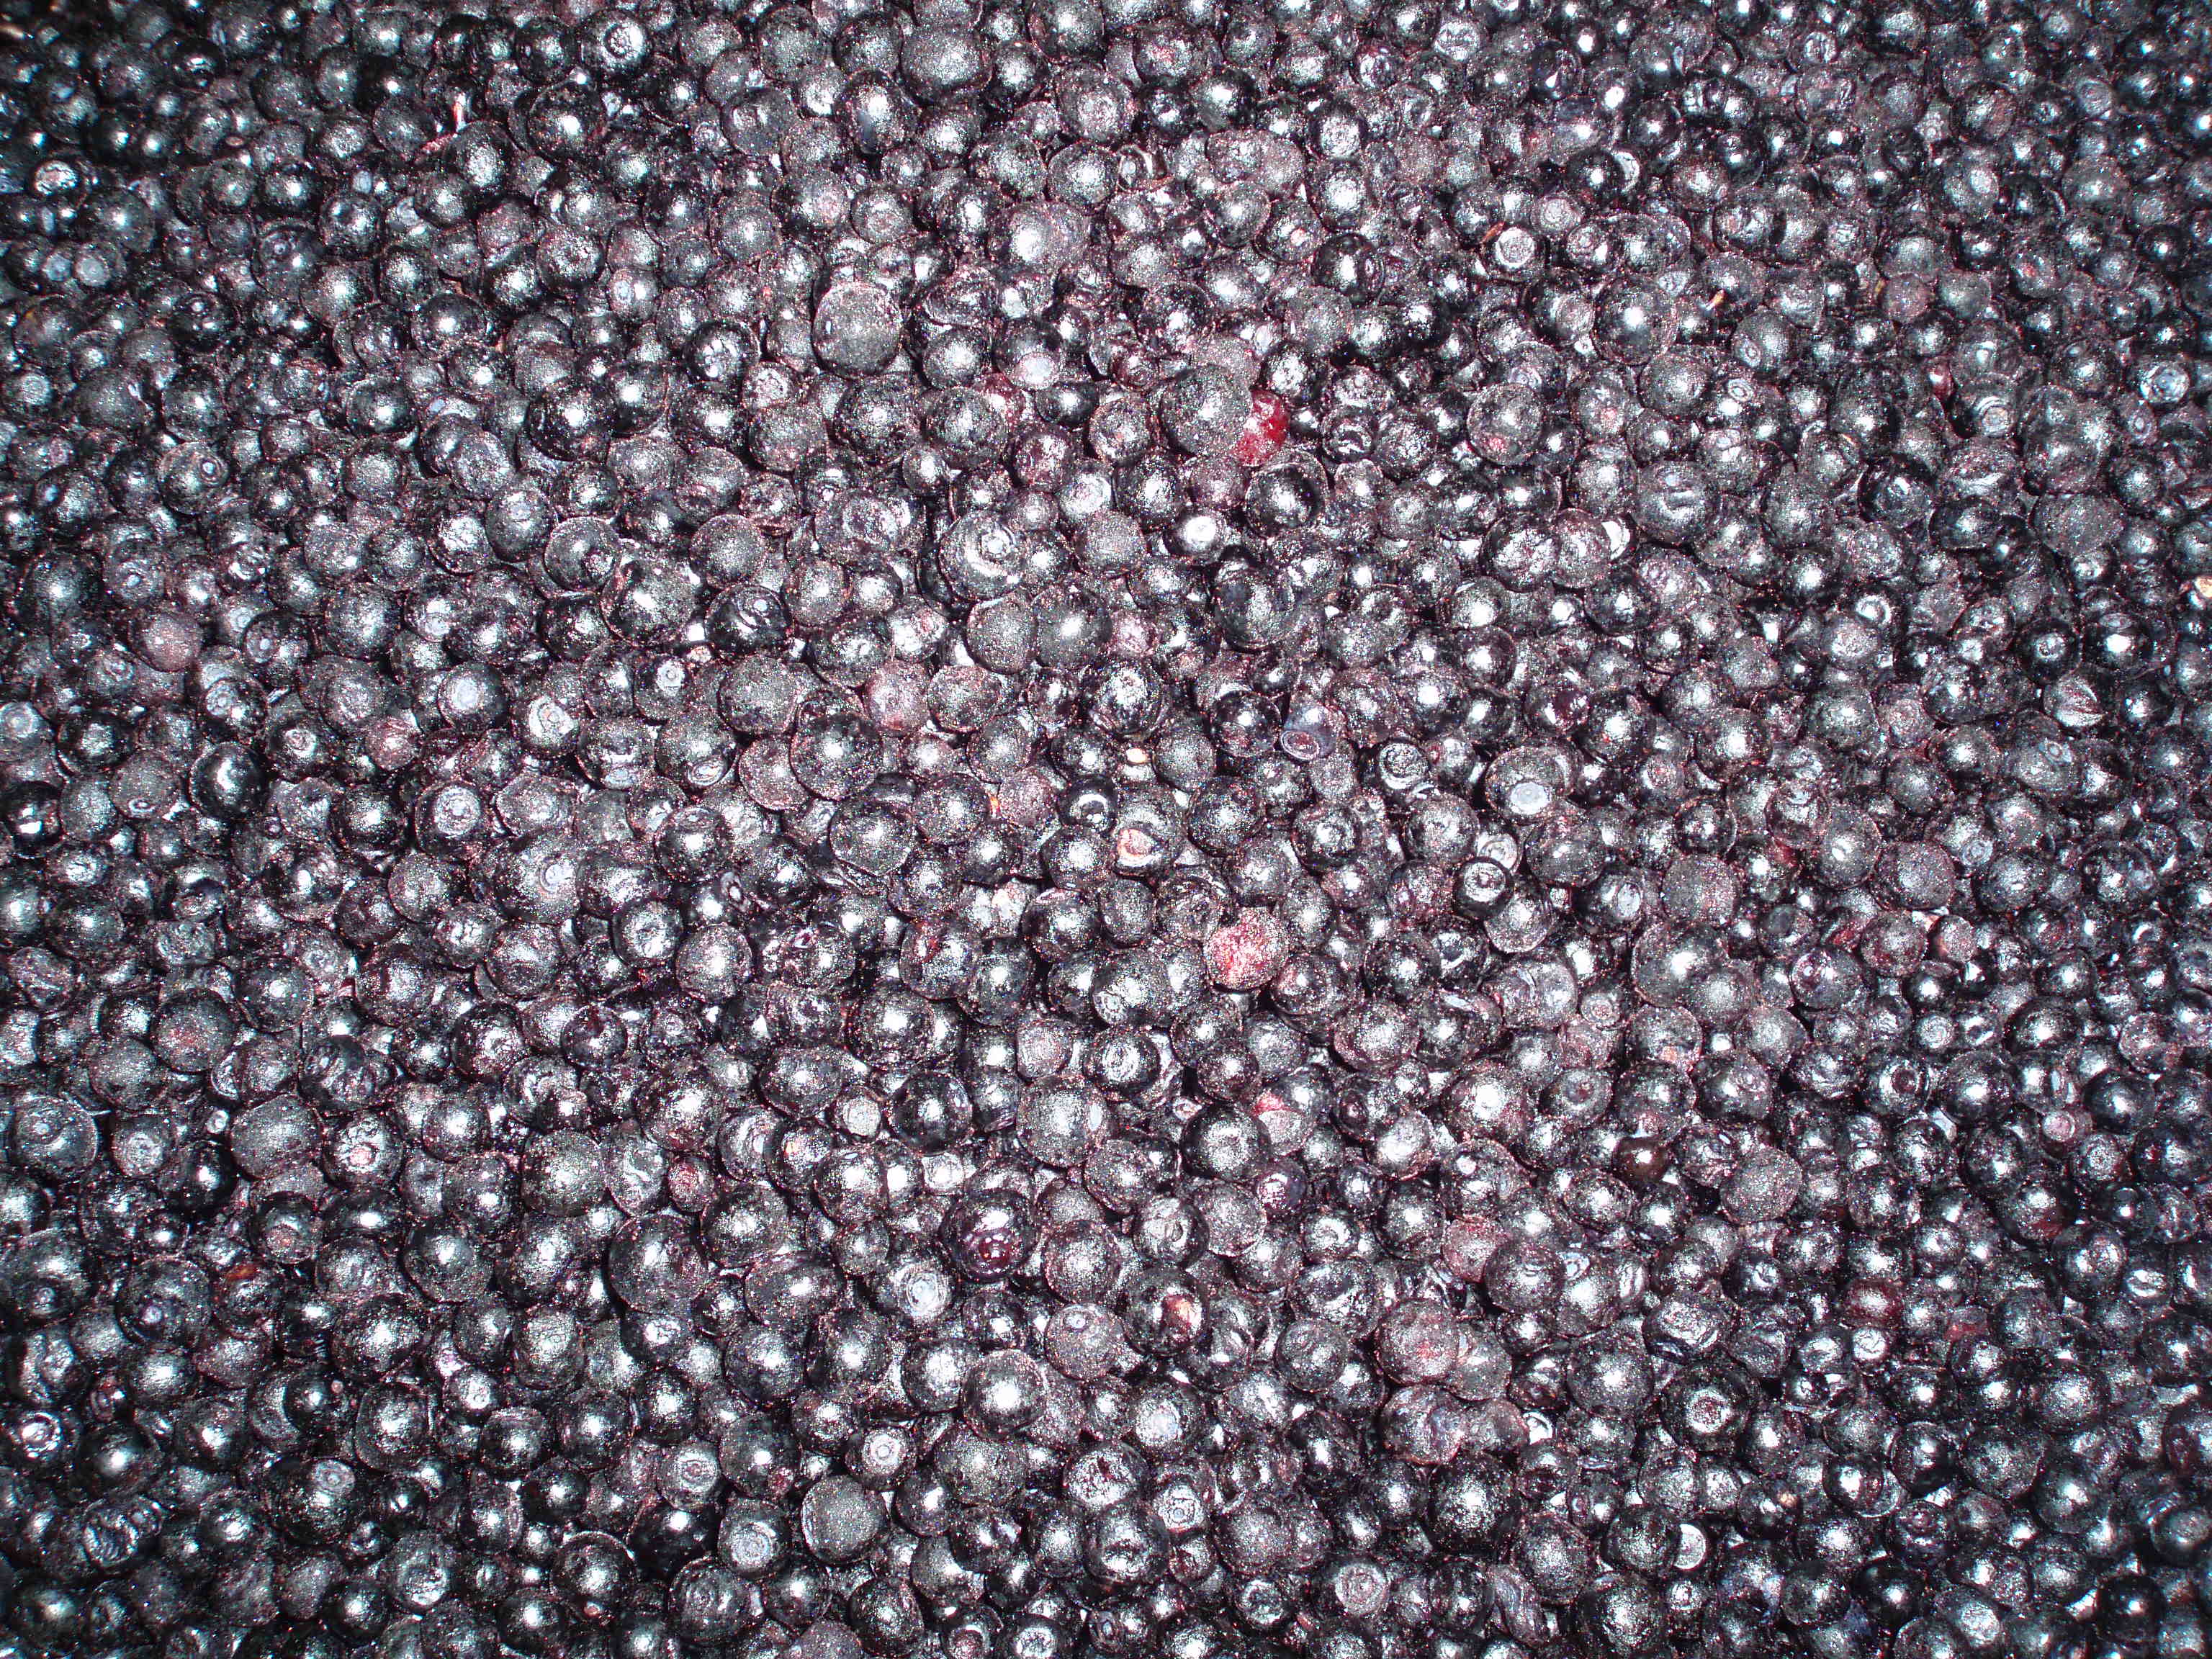 IQF wild blueberry. Bilberry berries. Vacciunium Myrtillus.